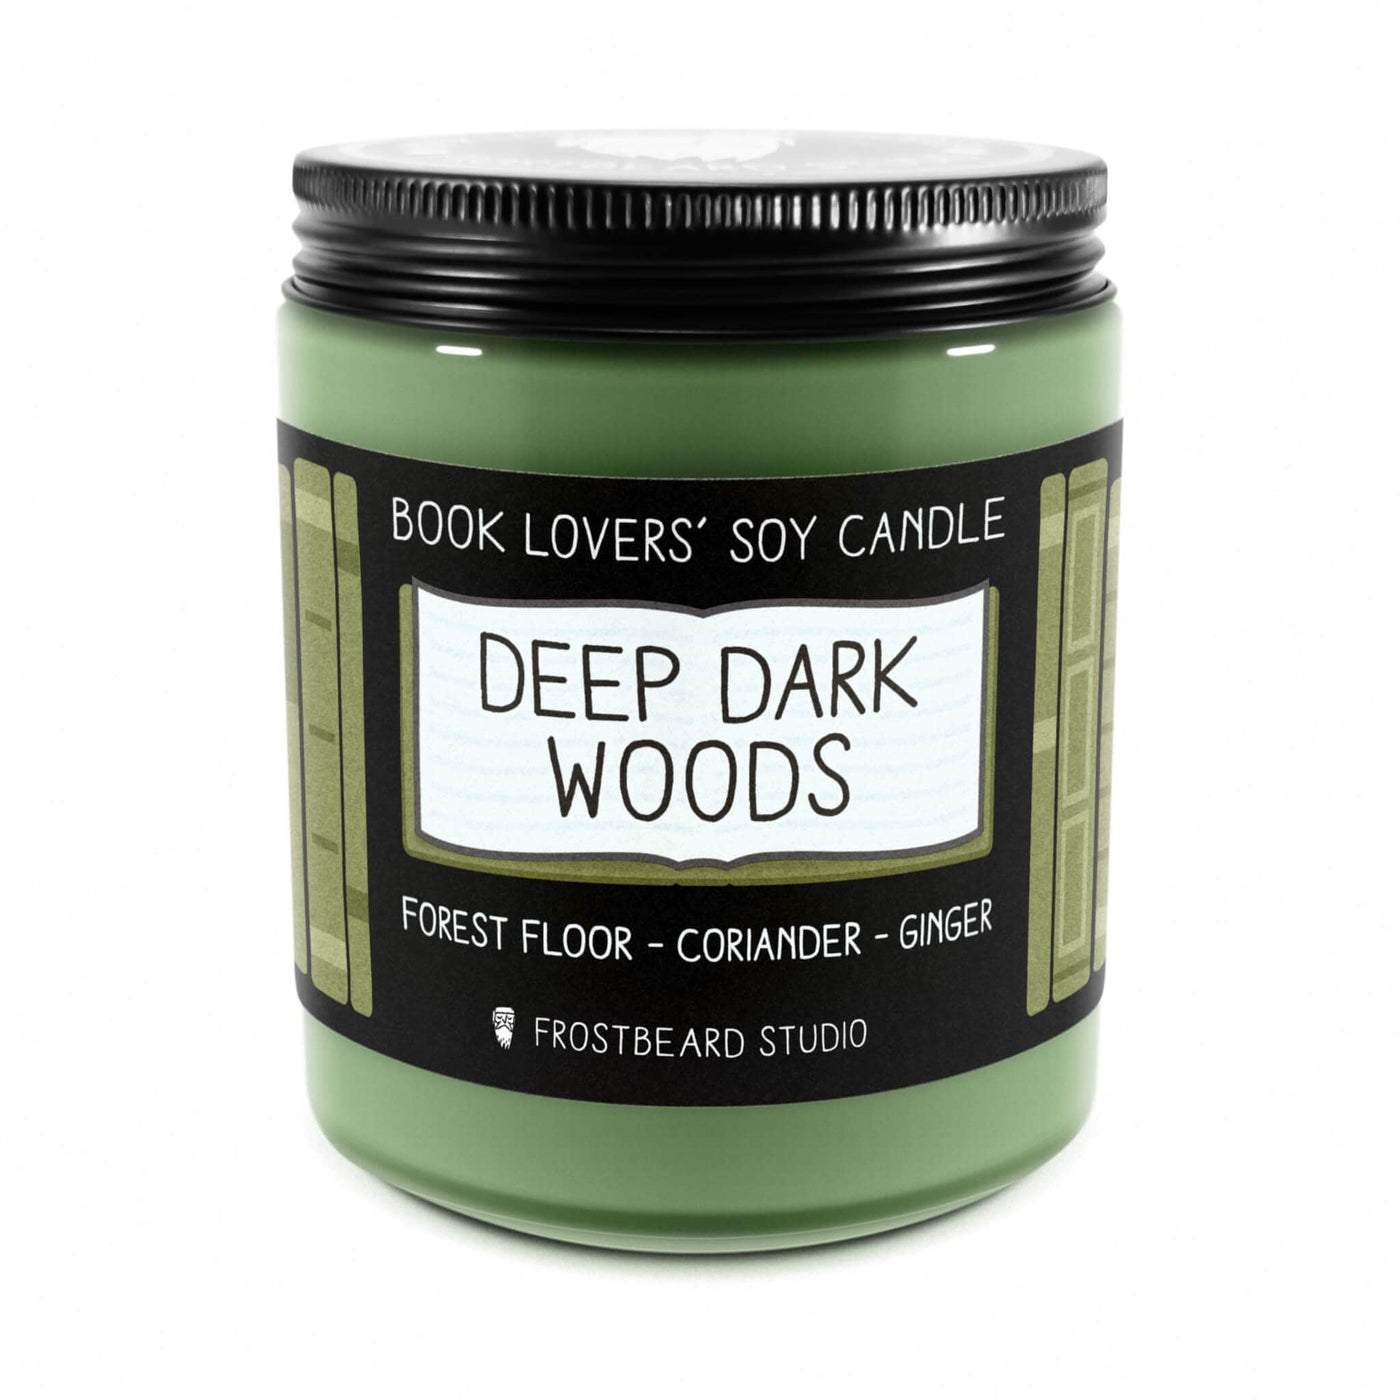 Deep Dark Woods  -  8 oz Jar  -  Book Lovers' Soy Candle  -  Frostbeard Studio